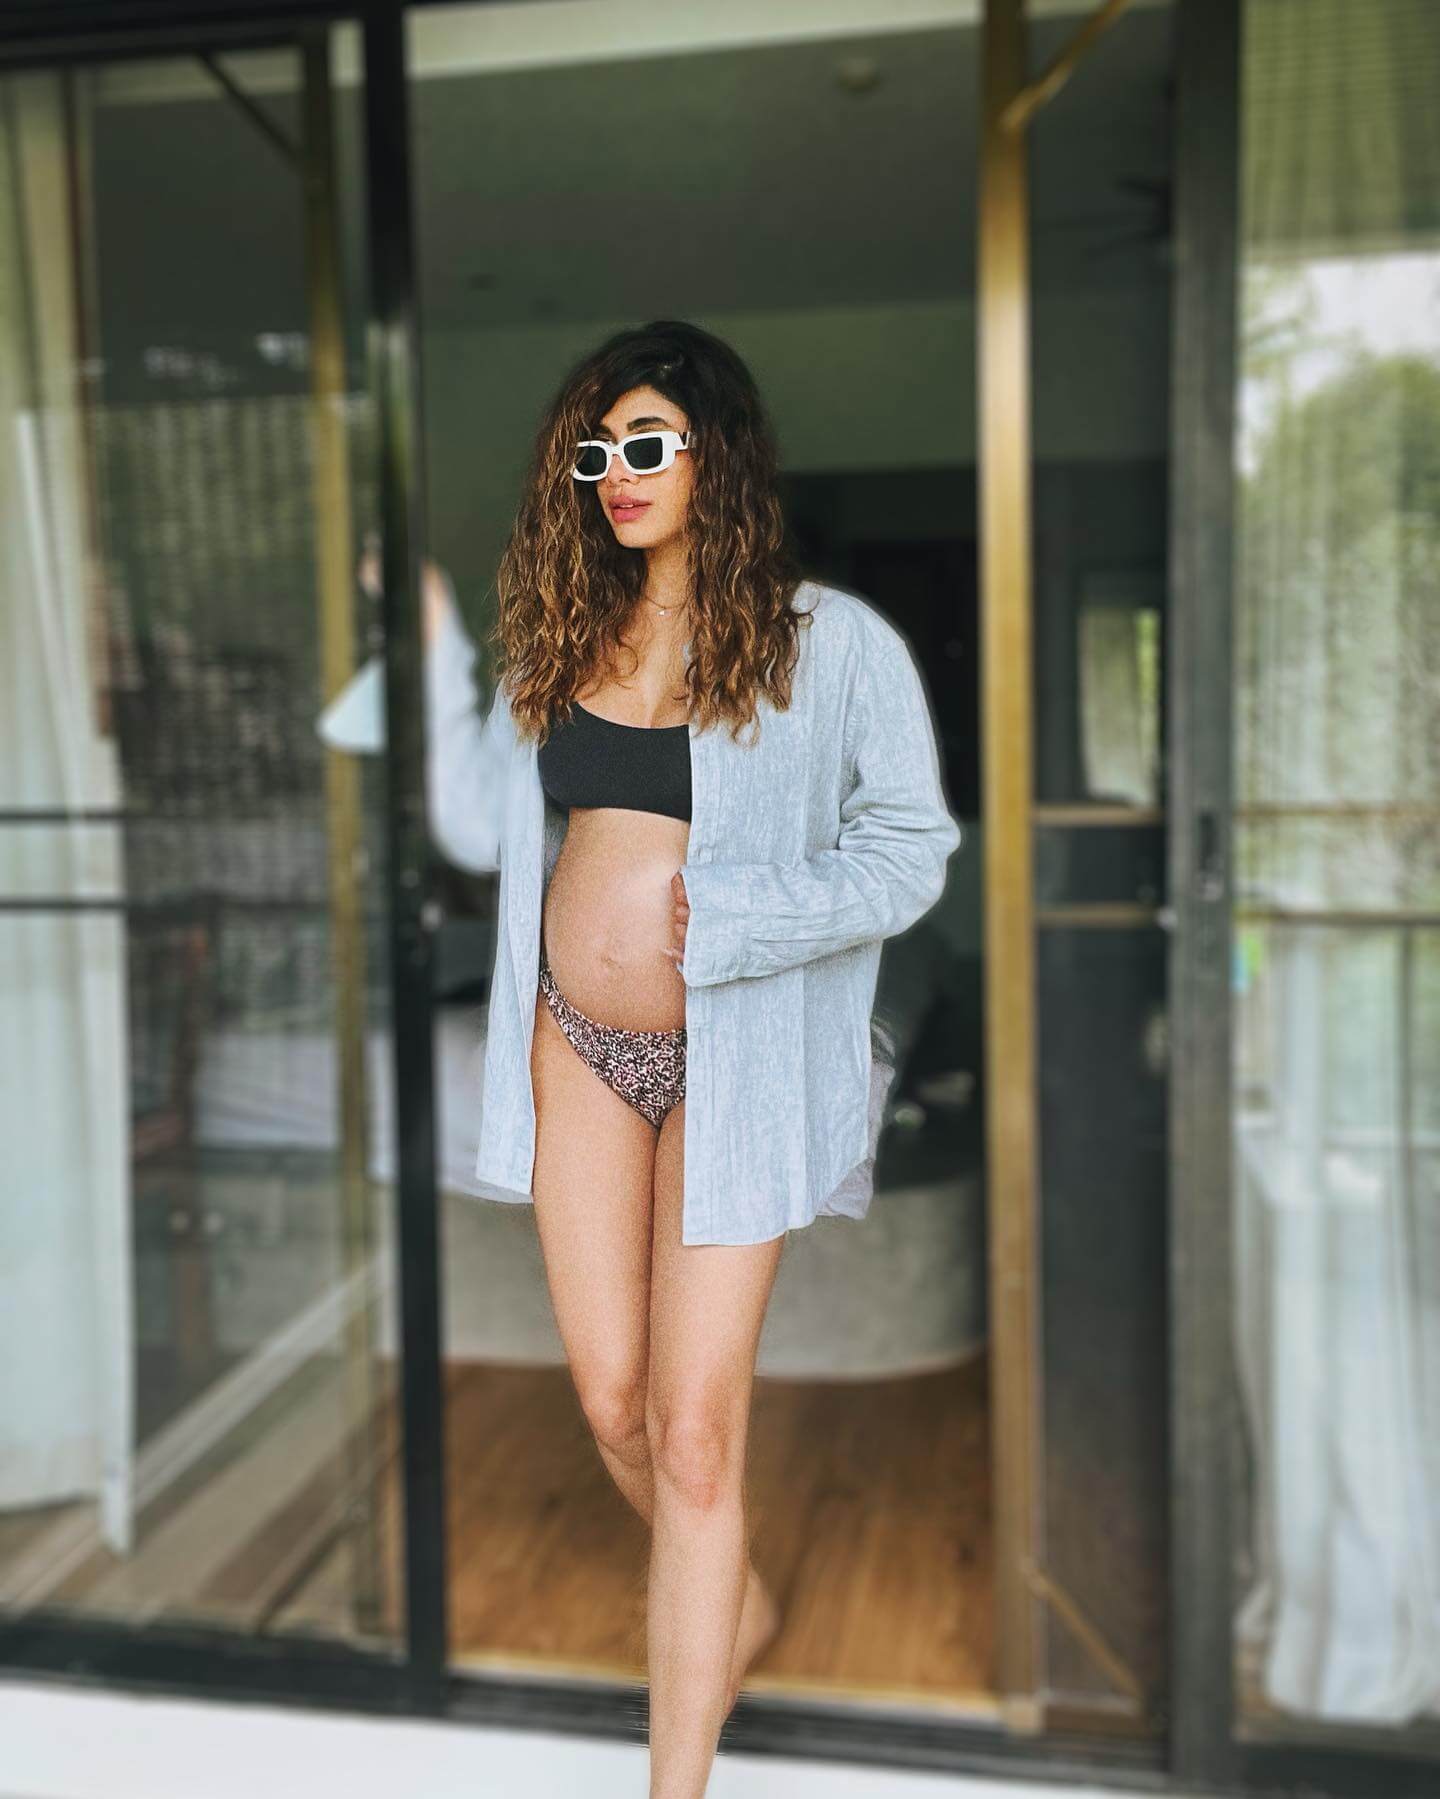 Malvika Sitlani Slaying The Bikini Look With Her Baby Bump Sporting With Chic White & Black Sunglasses